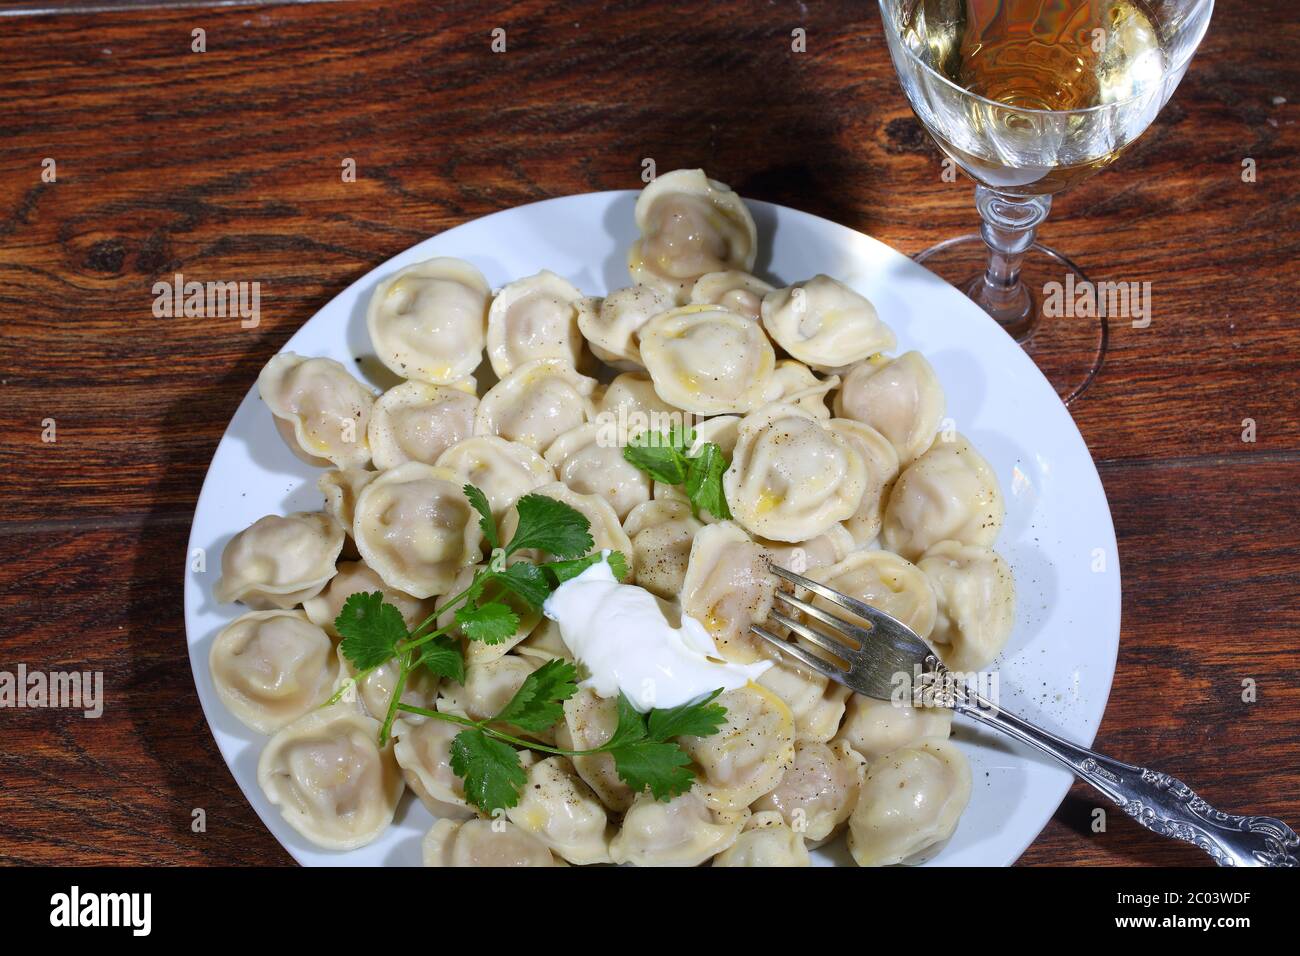 Wine and pelmeni in a plate Stock Photo